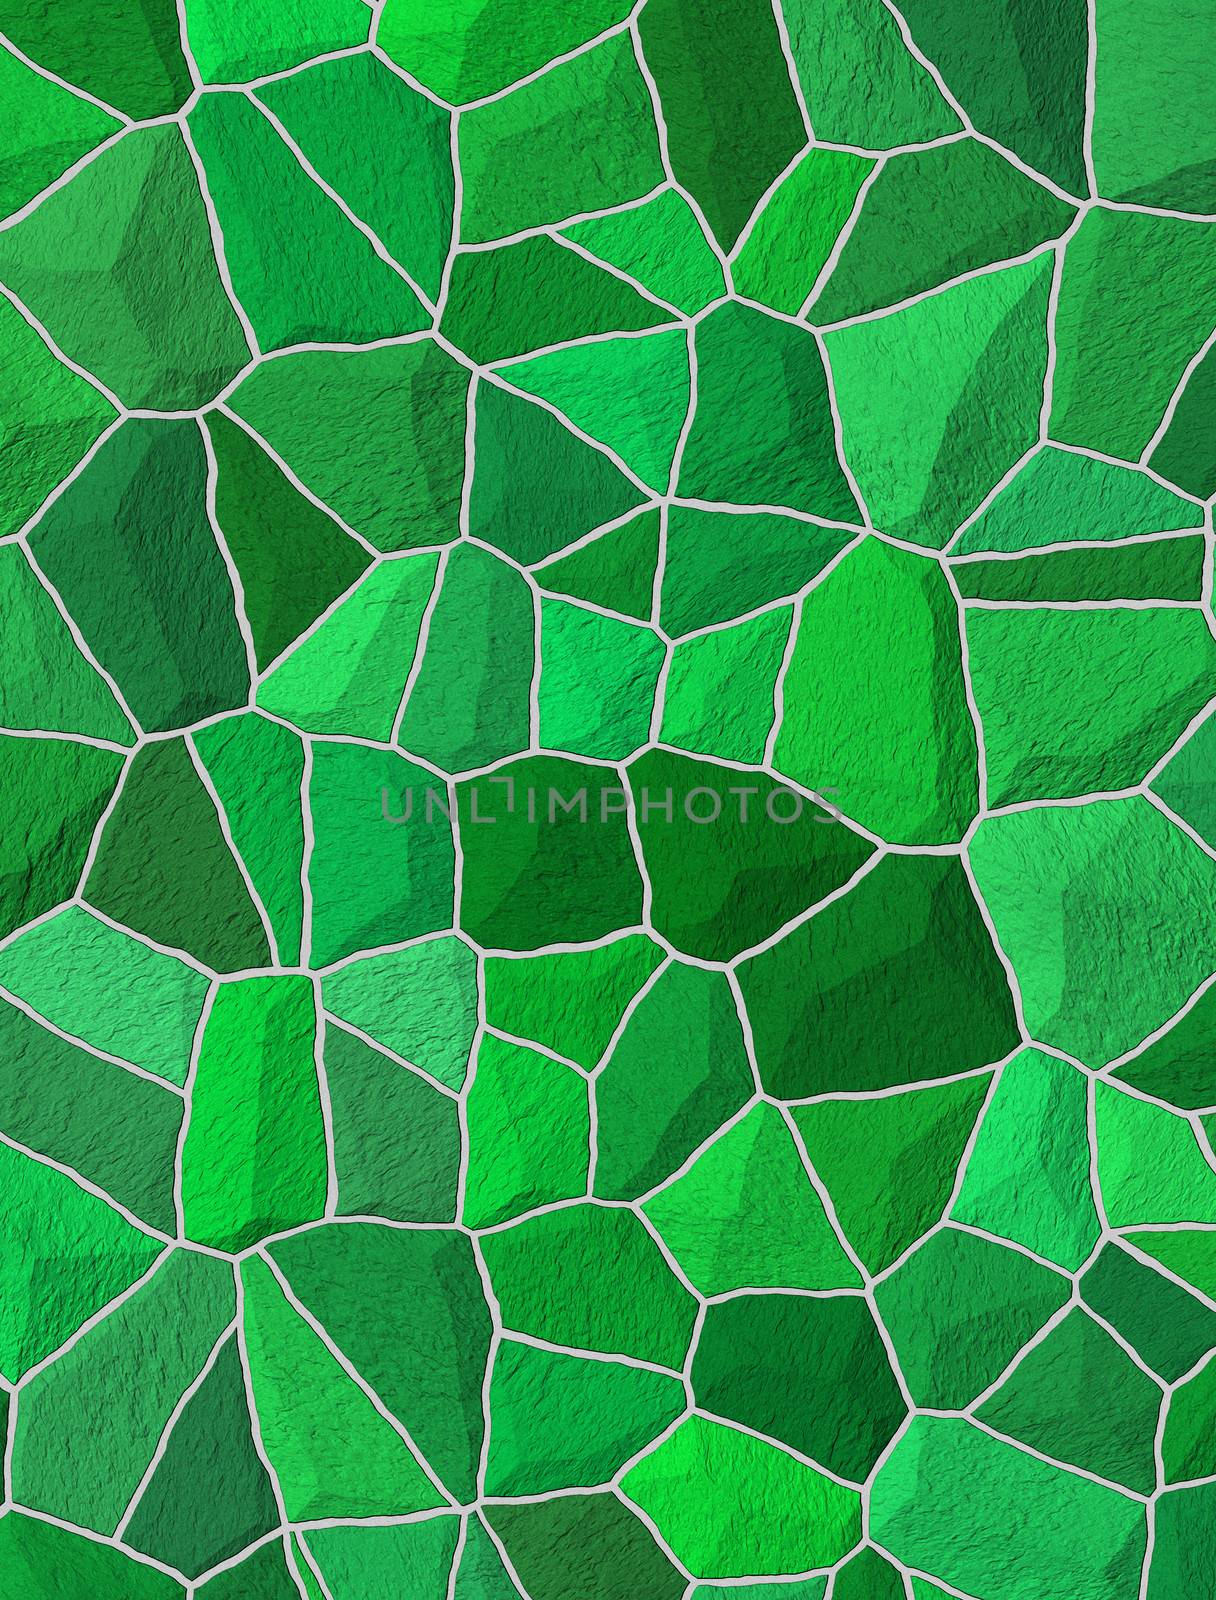 Broken tiles mosaic floor or wall. Background texture by sfinks